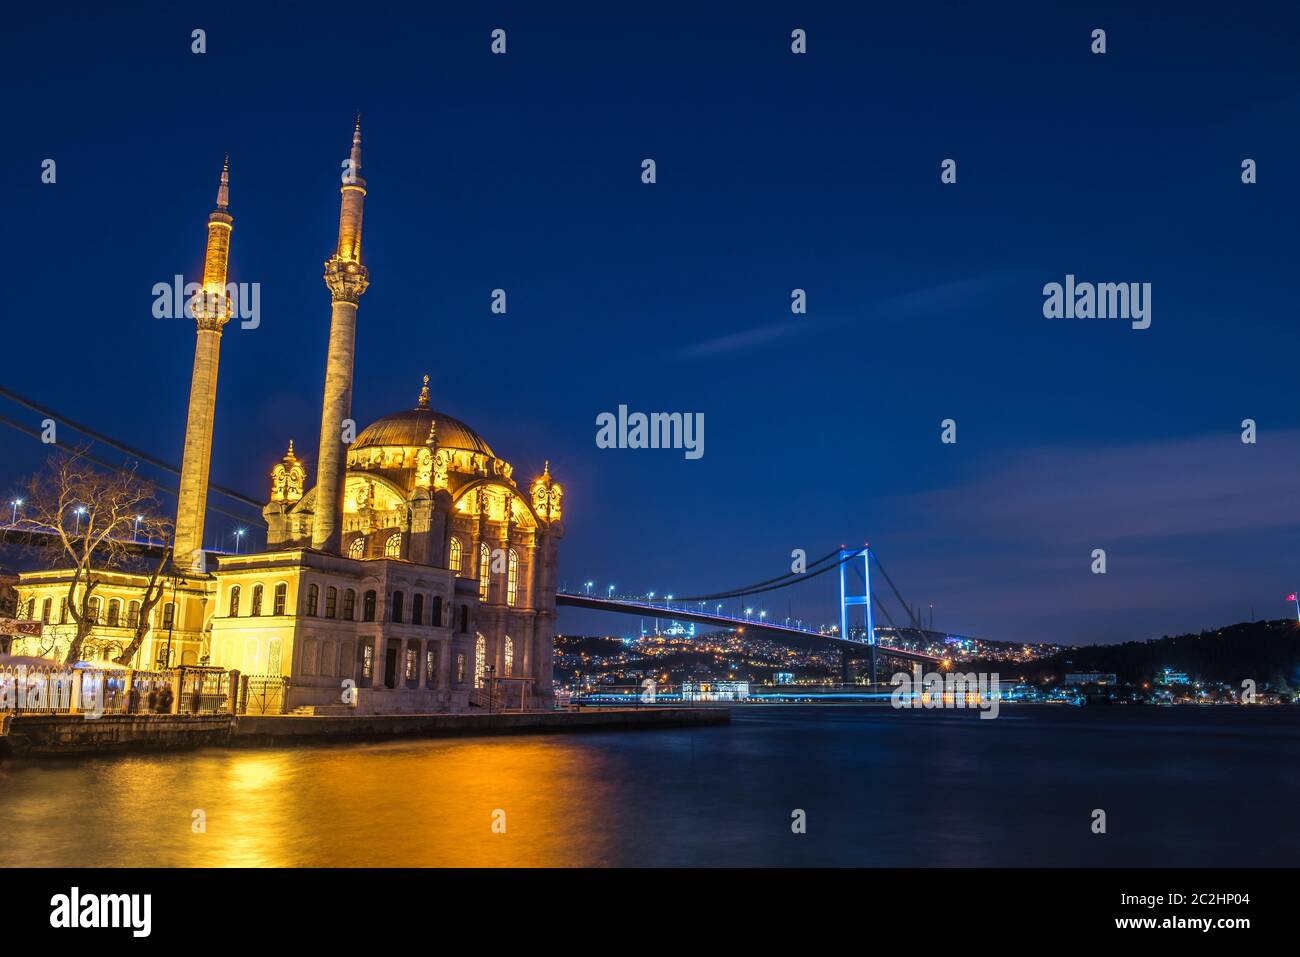 Ortakoy Moschee und Bosporus Brücke (15. Juli Martyrs Brücke) Nacht Blick. Istanbul, Türkei. Stockfoto